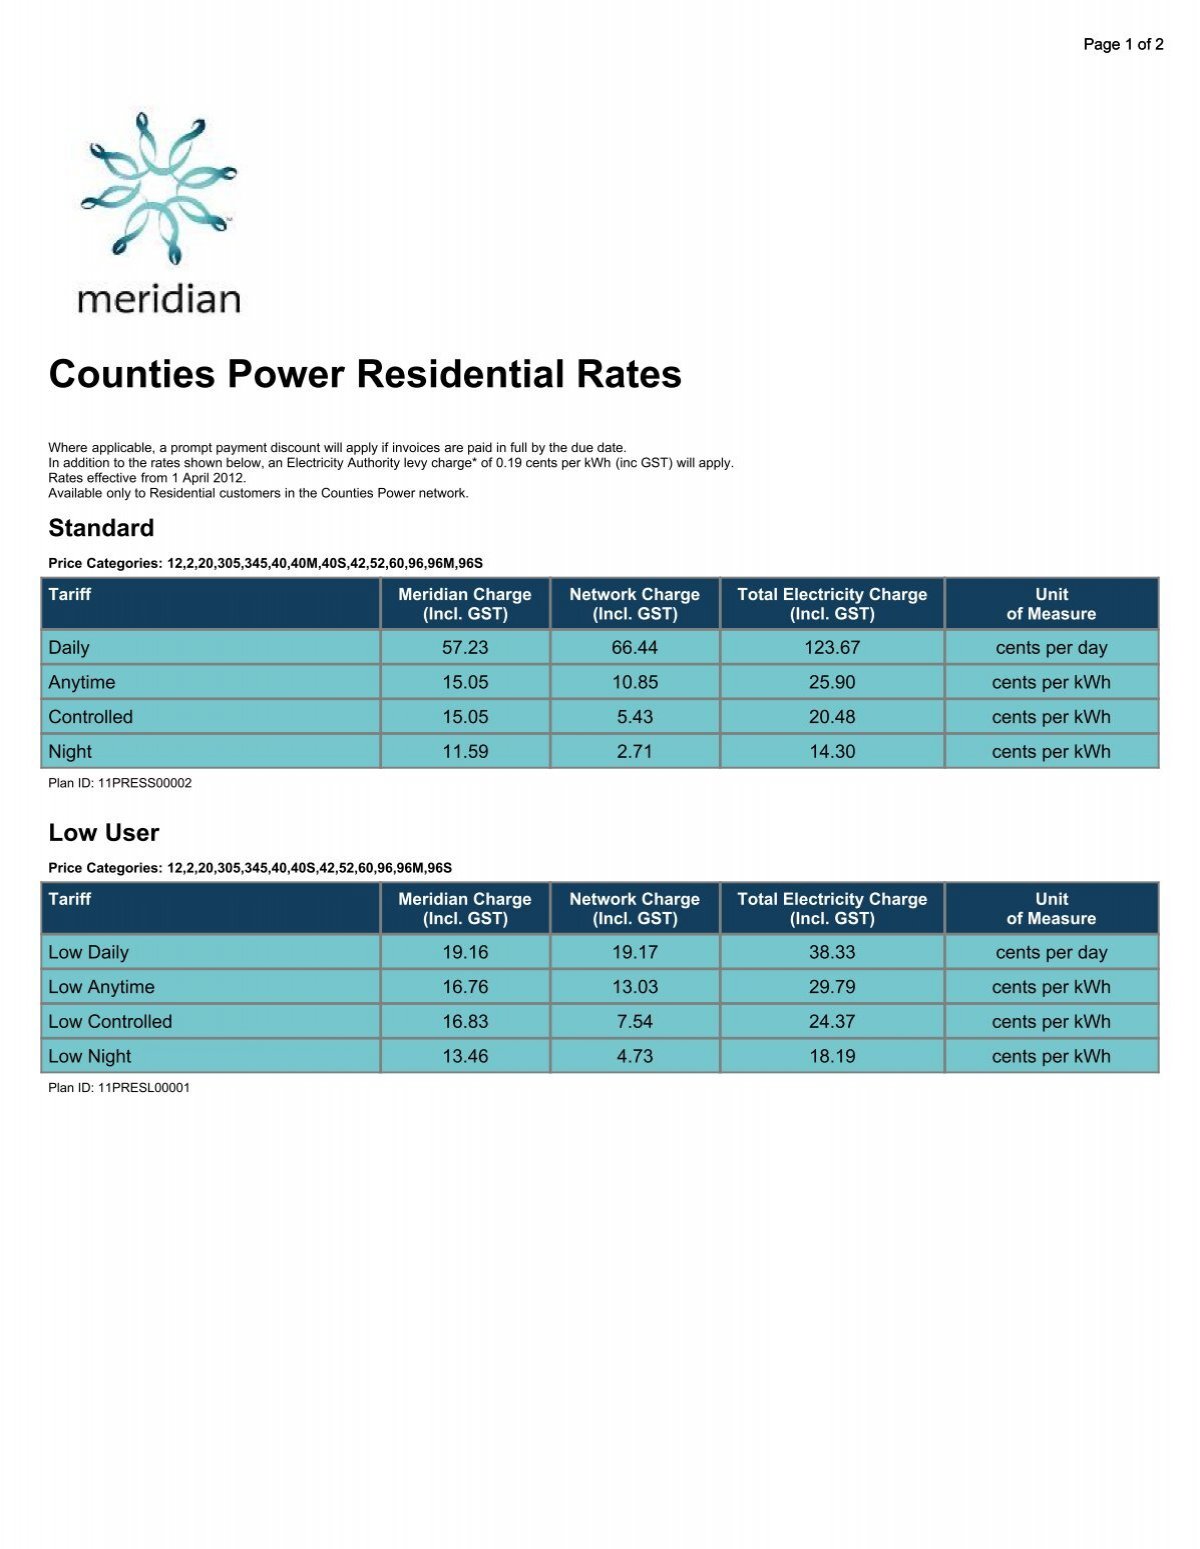 counties-power-residential-rates-meridian-energy